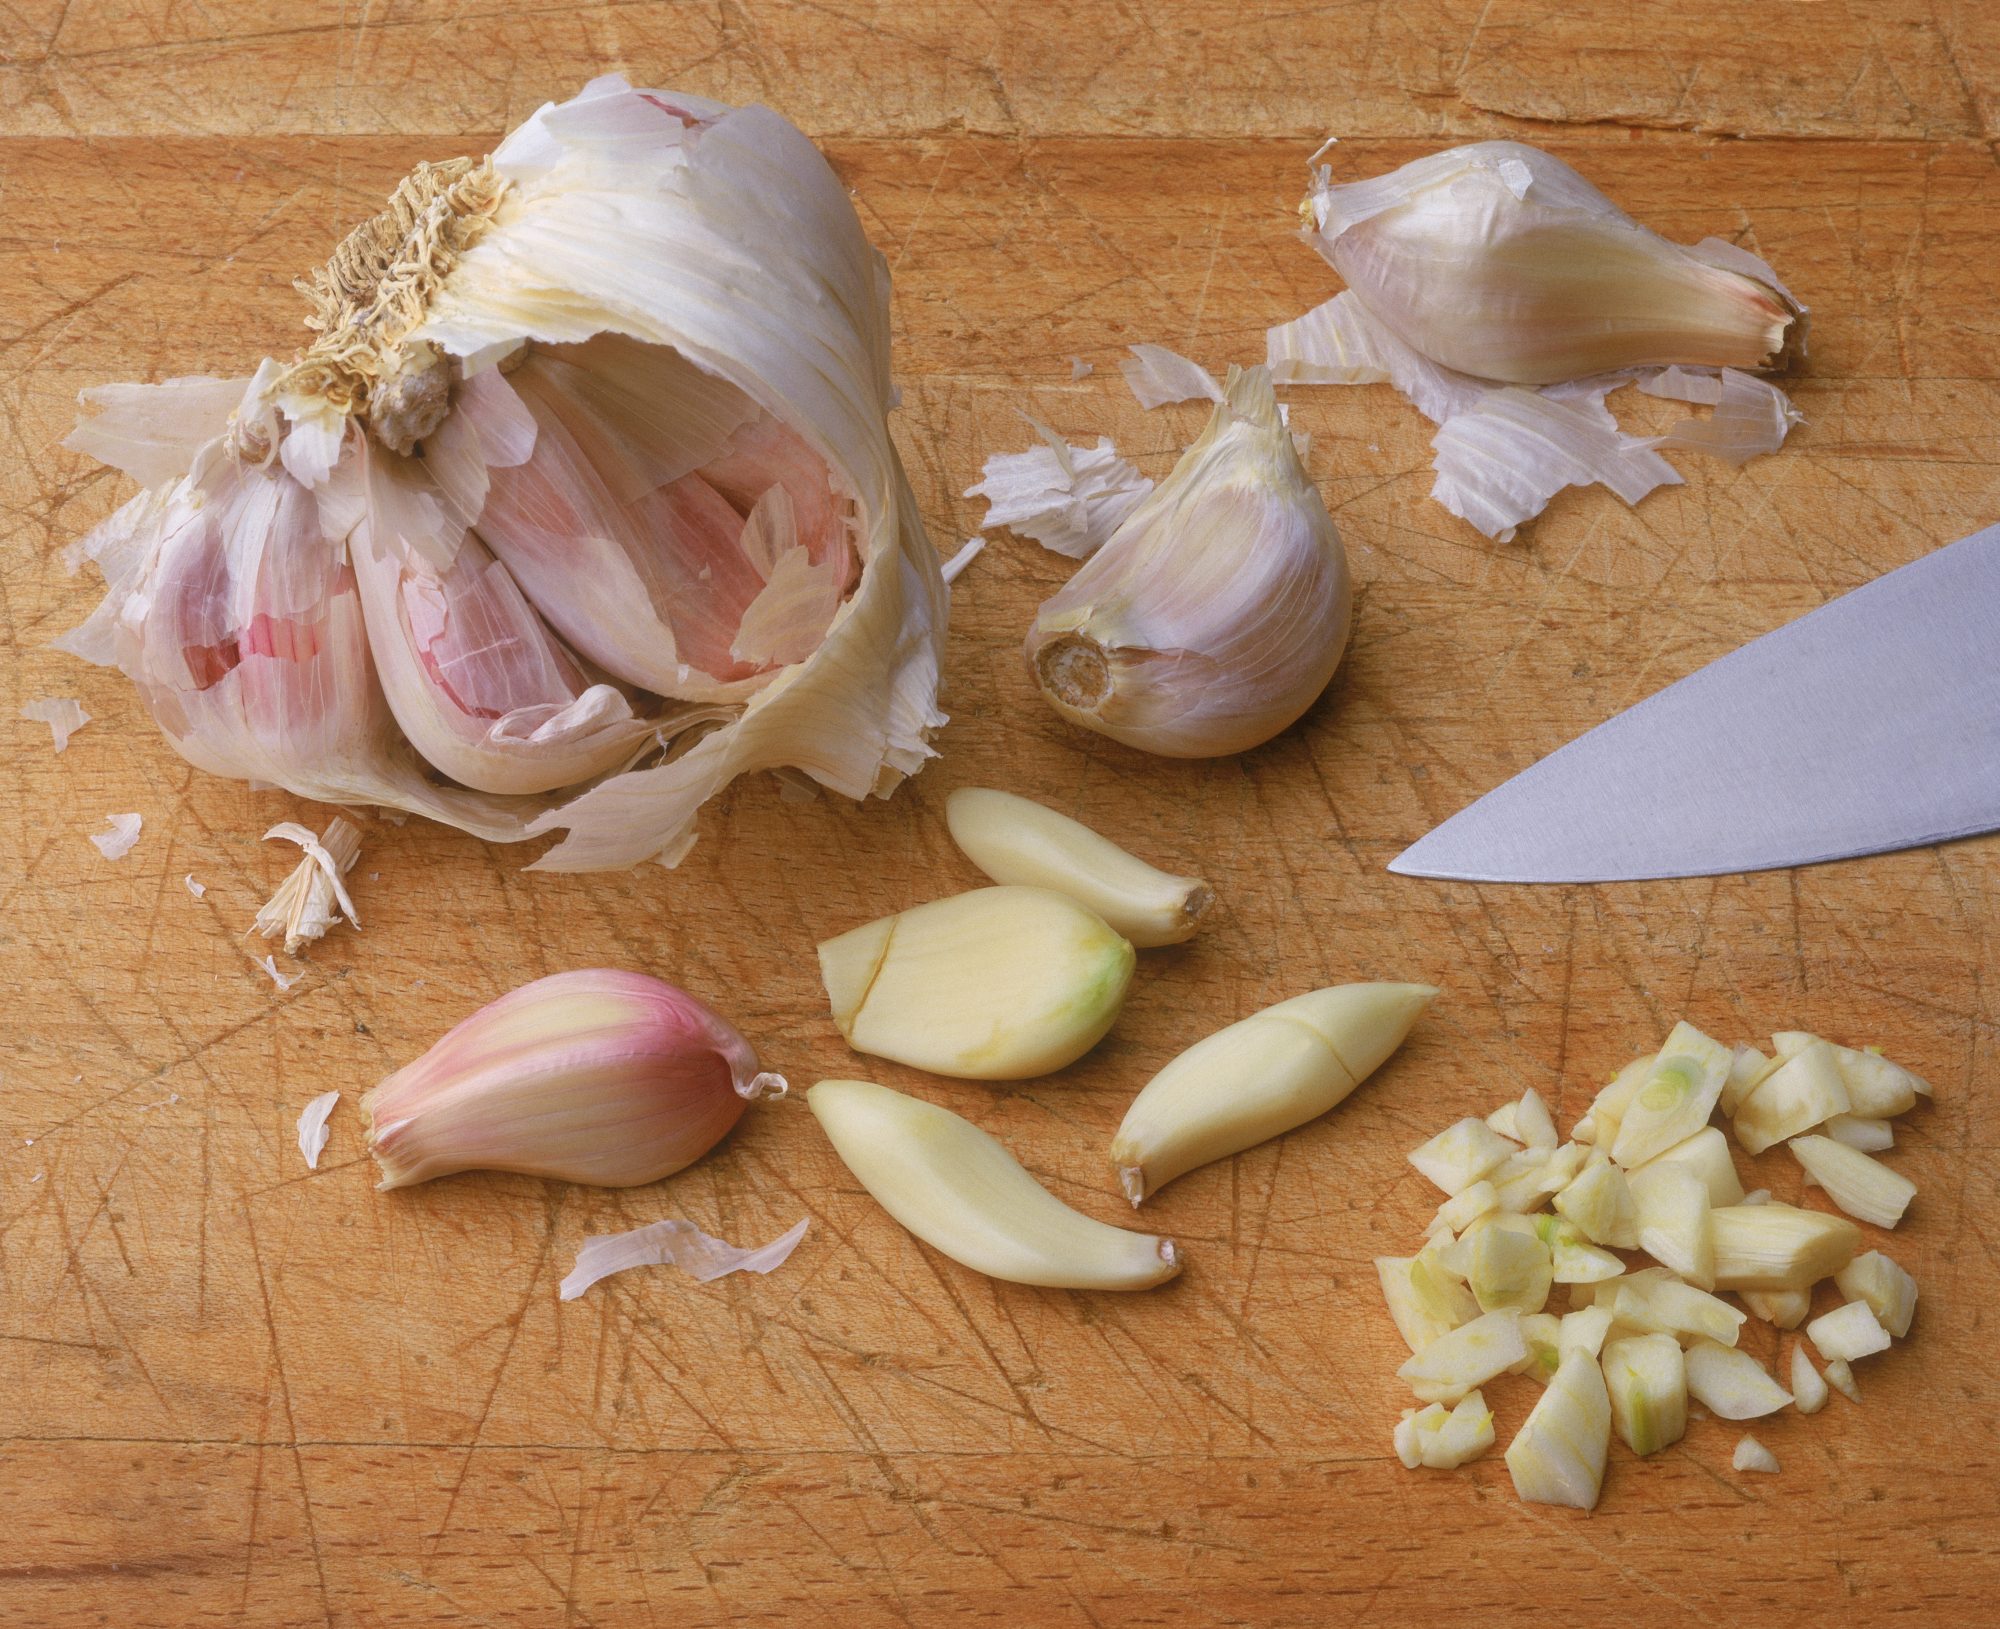 4 Common Ways to Ruin Your Garlic